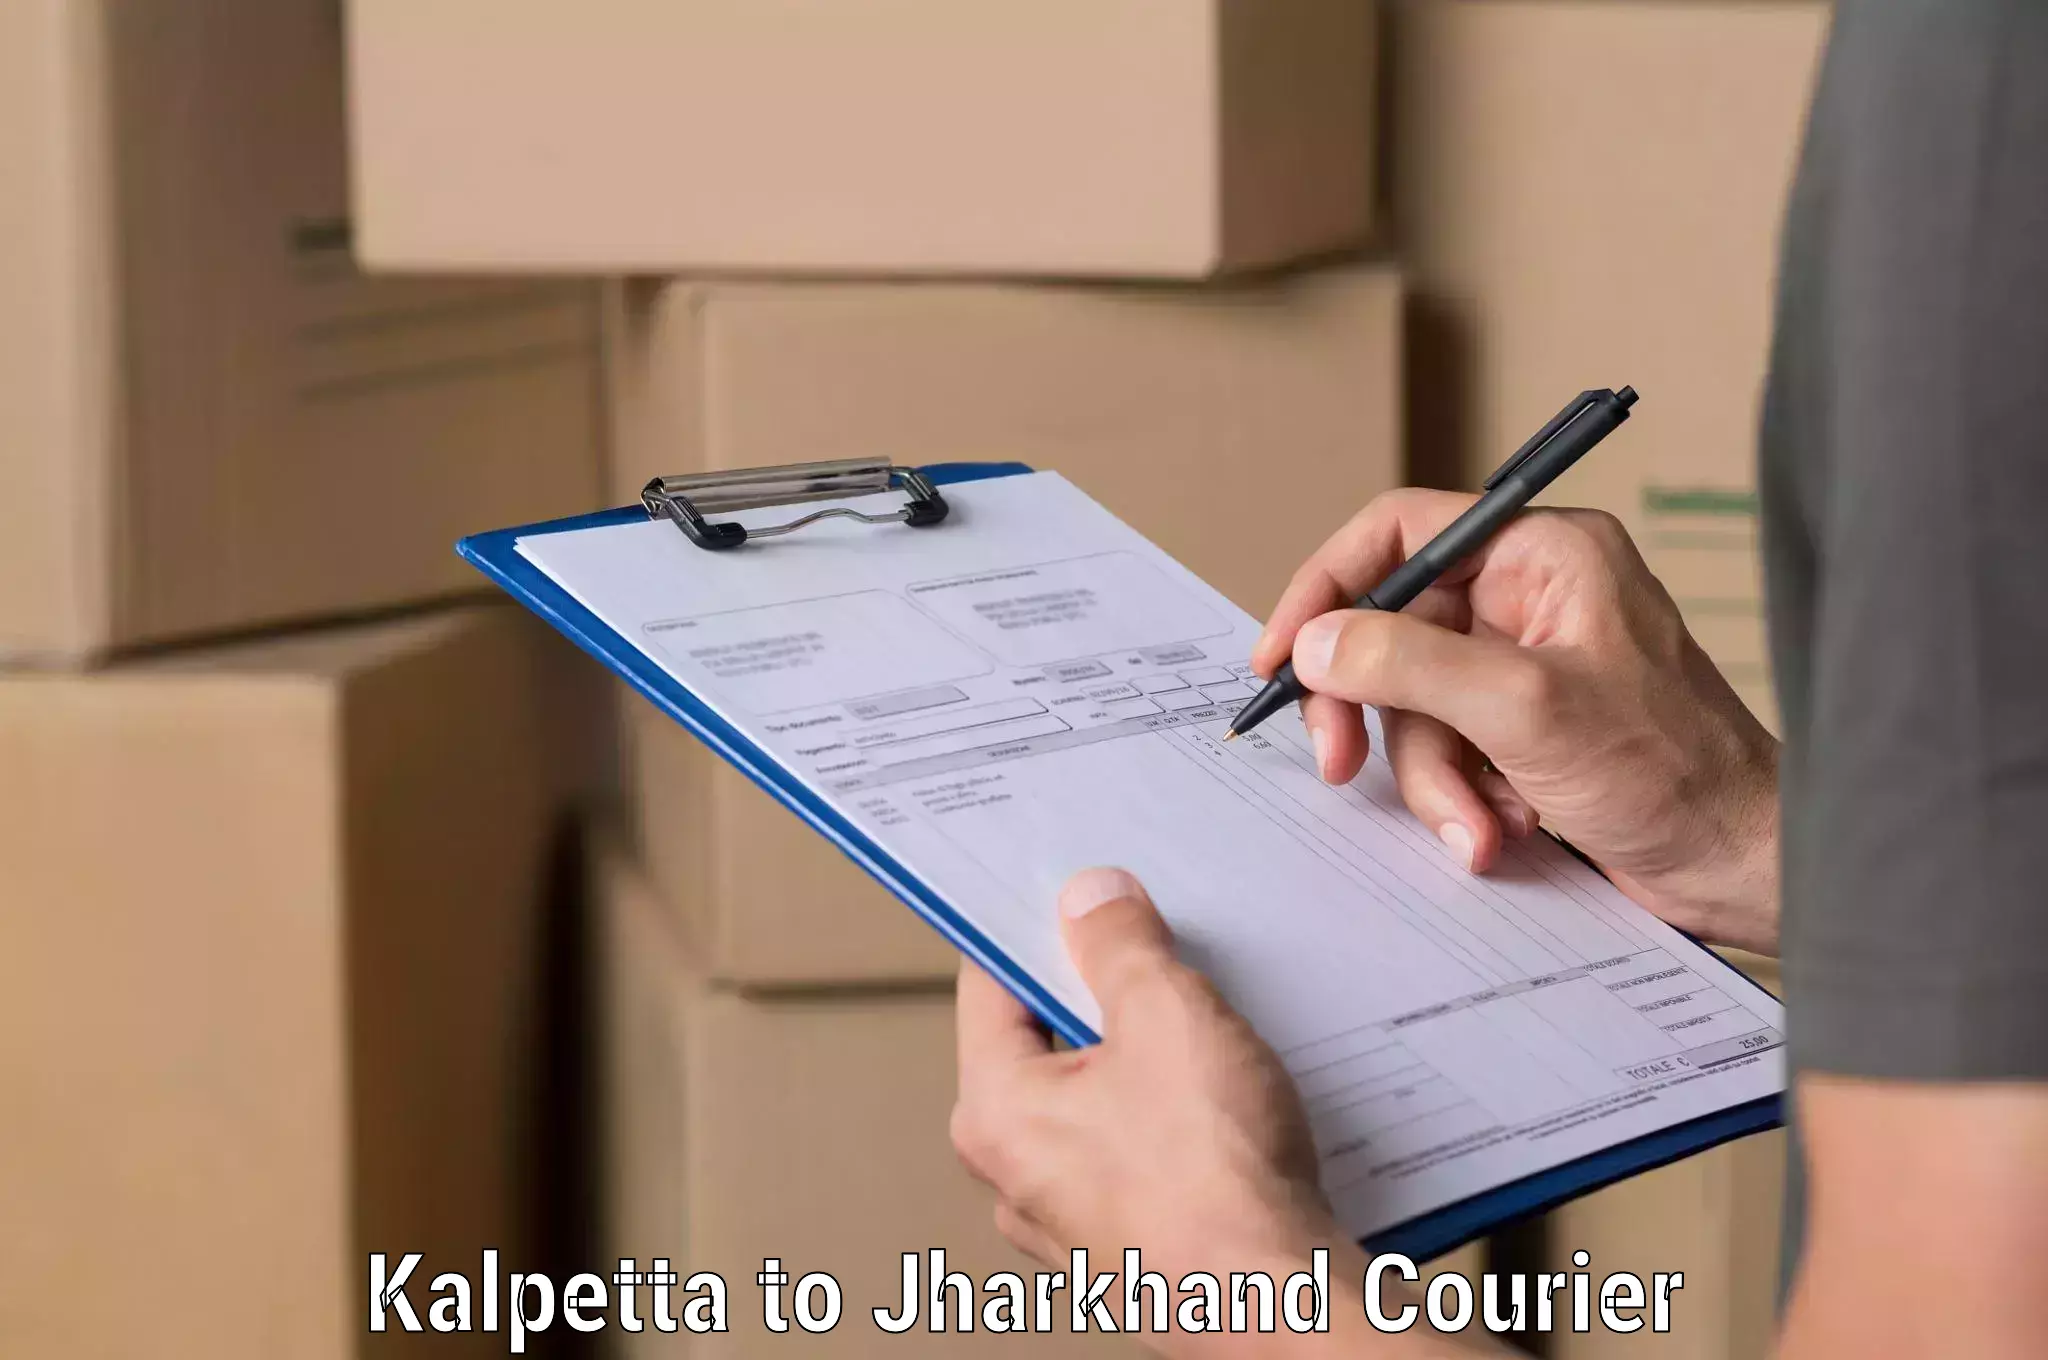 Affordable parcel service Kalpetta to Ranchi